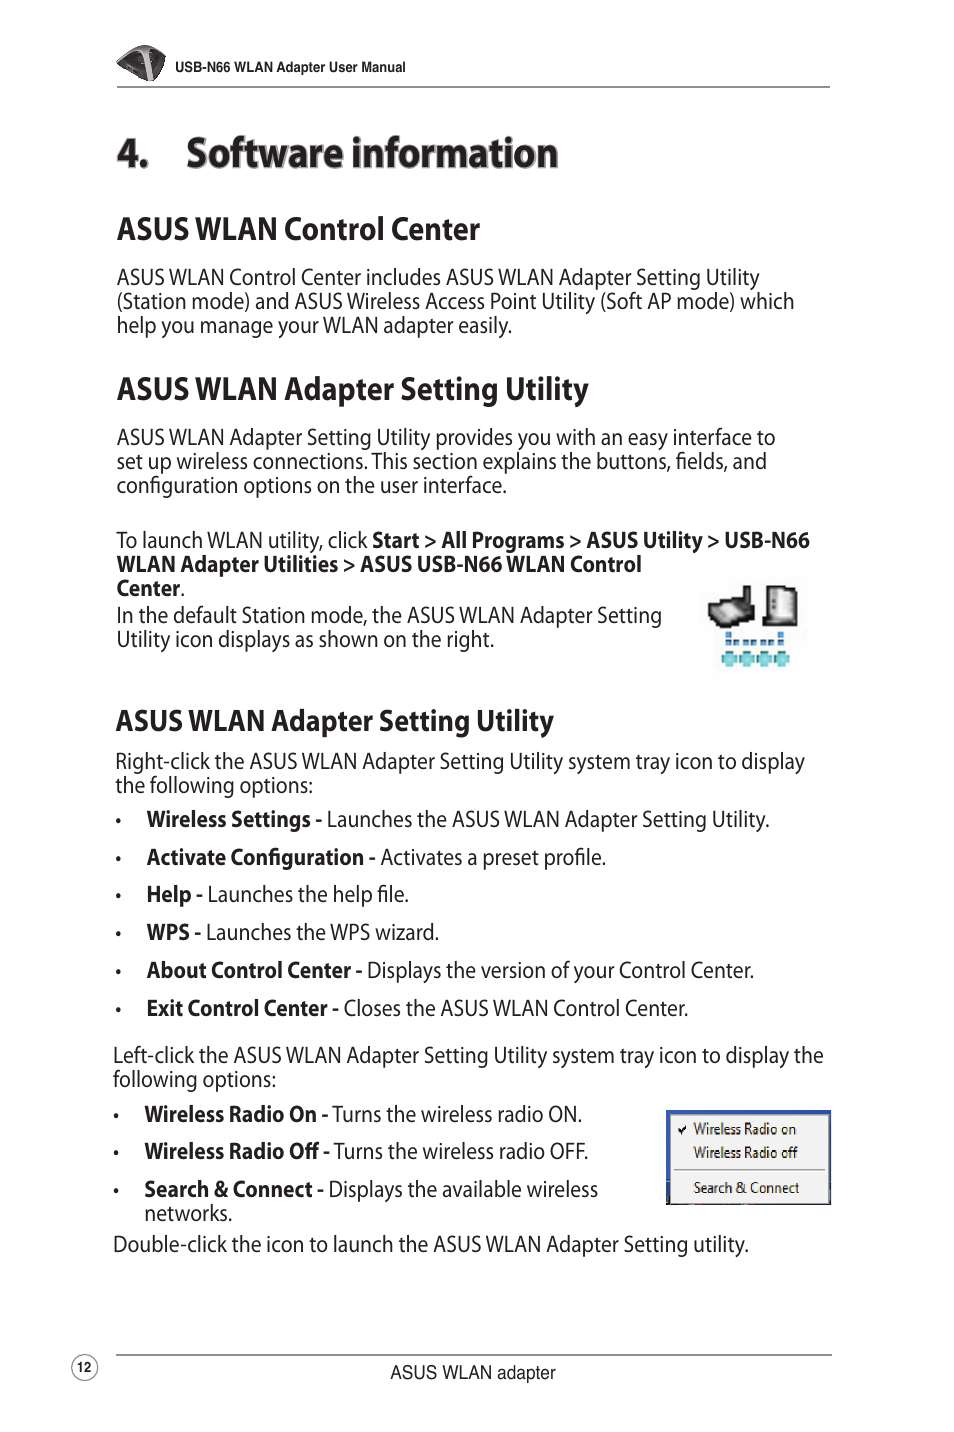 Software information, Asus wlan control center, Asus wlan card setting  utility | Asus USB-N66 User Manual | Page 12 / 35